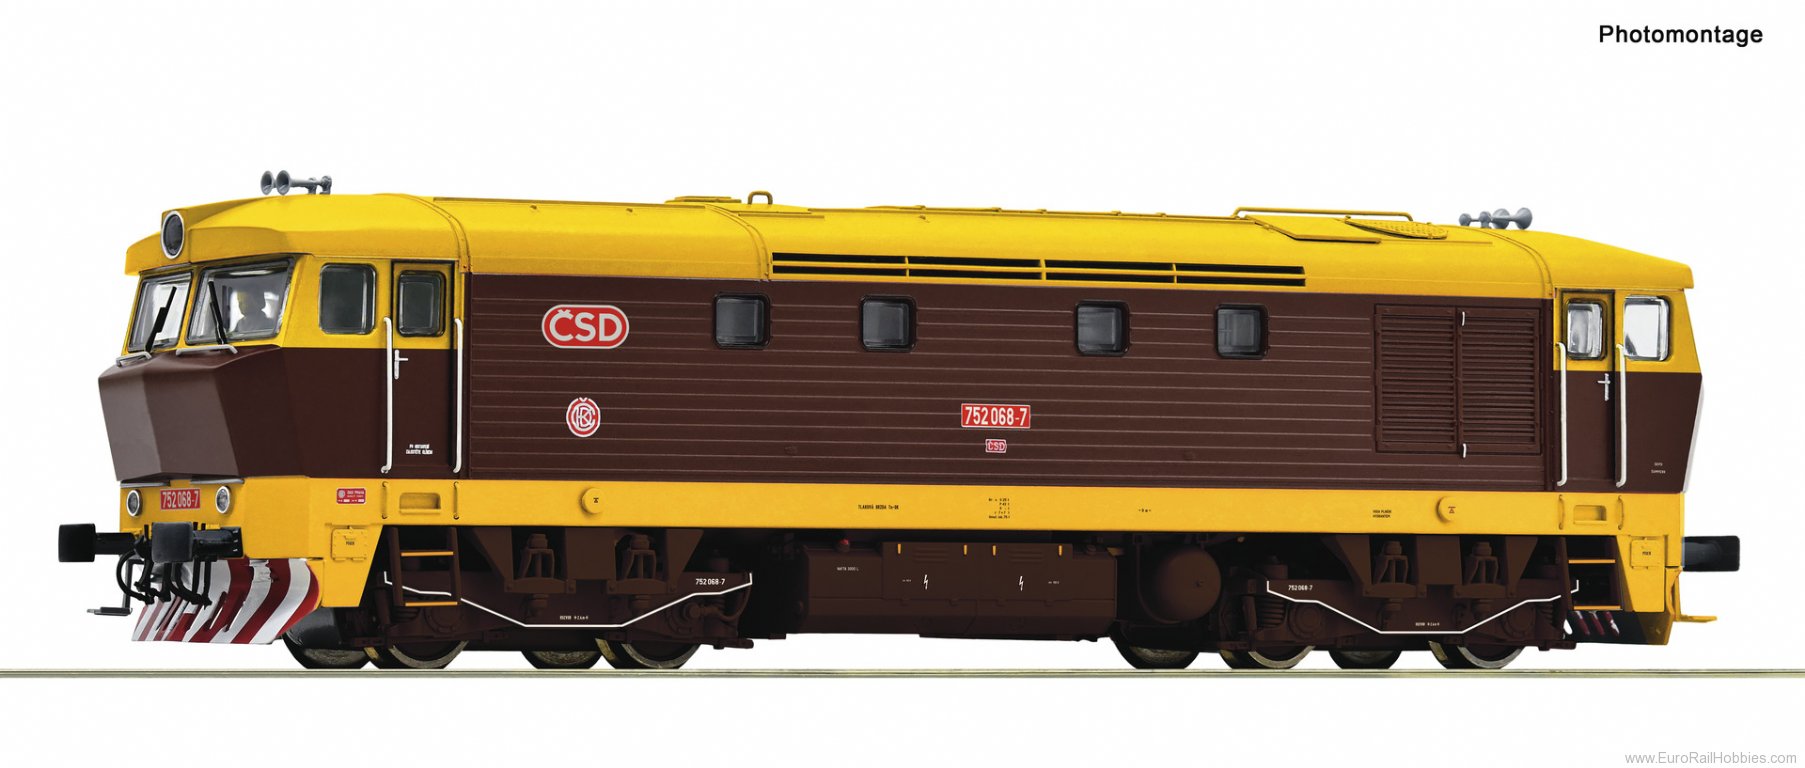 Roco 7310026 Diesel locomotive 752 068-7, CSD/CD (DCC Soun